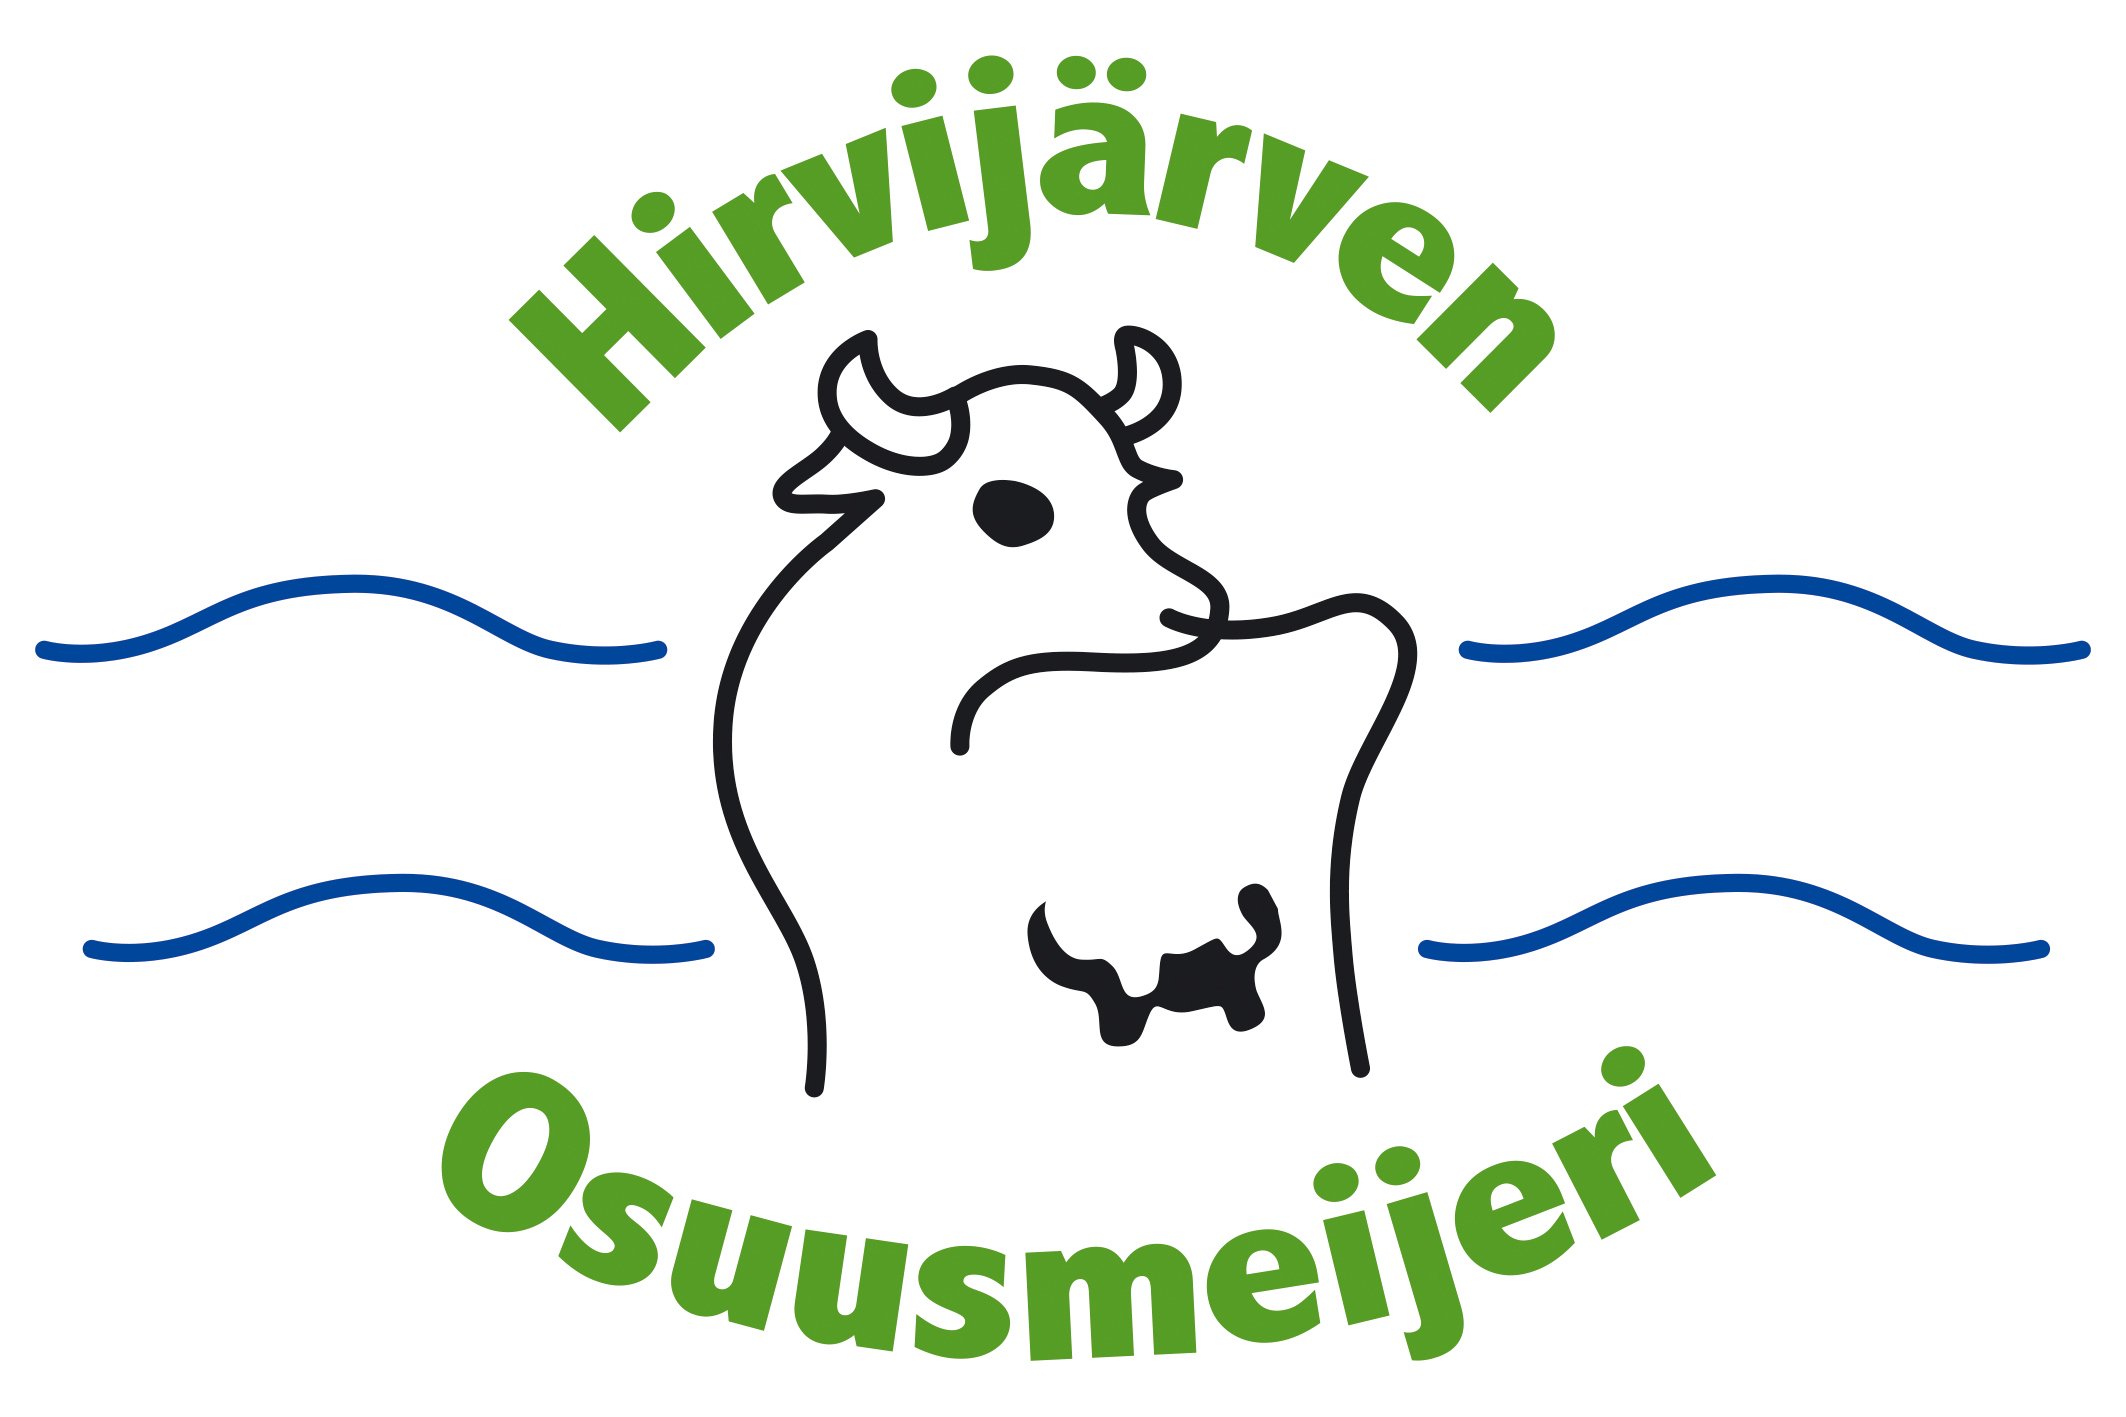 Hirvijarven_Osuusm_logo_hires.jpg